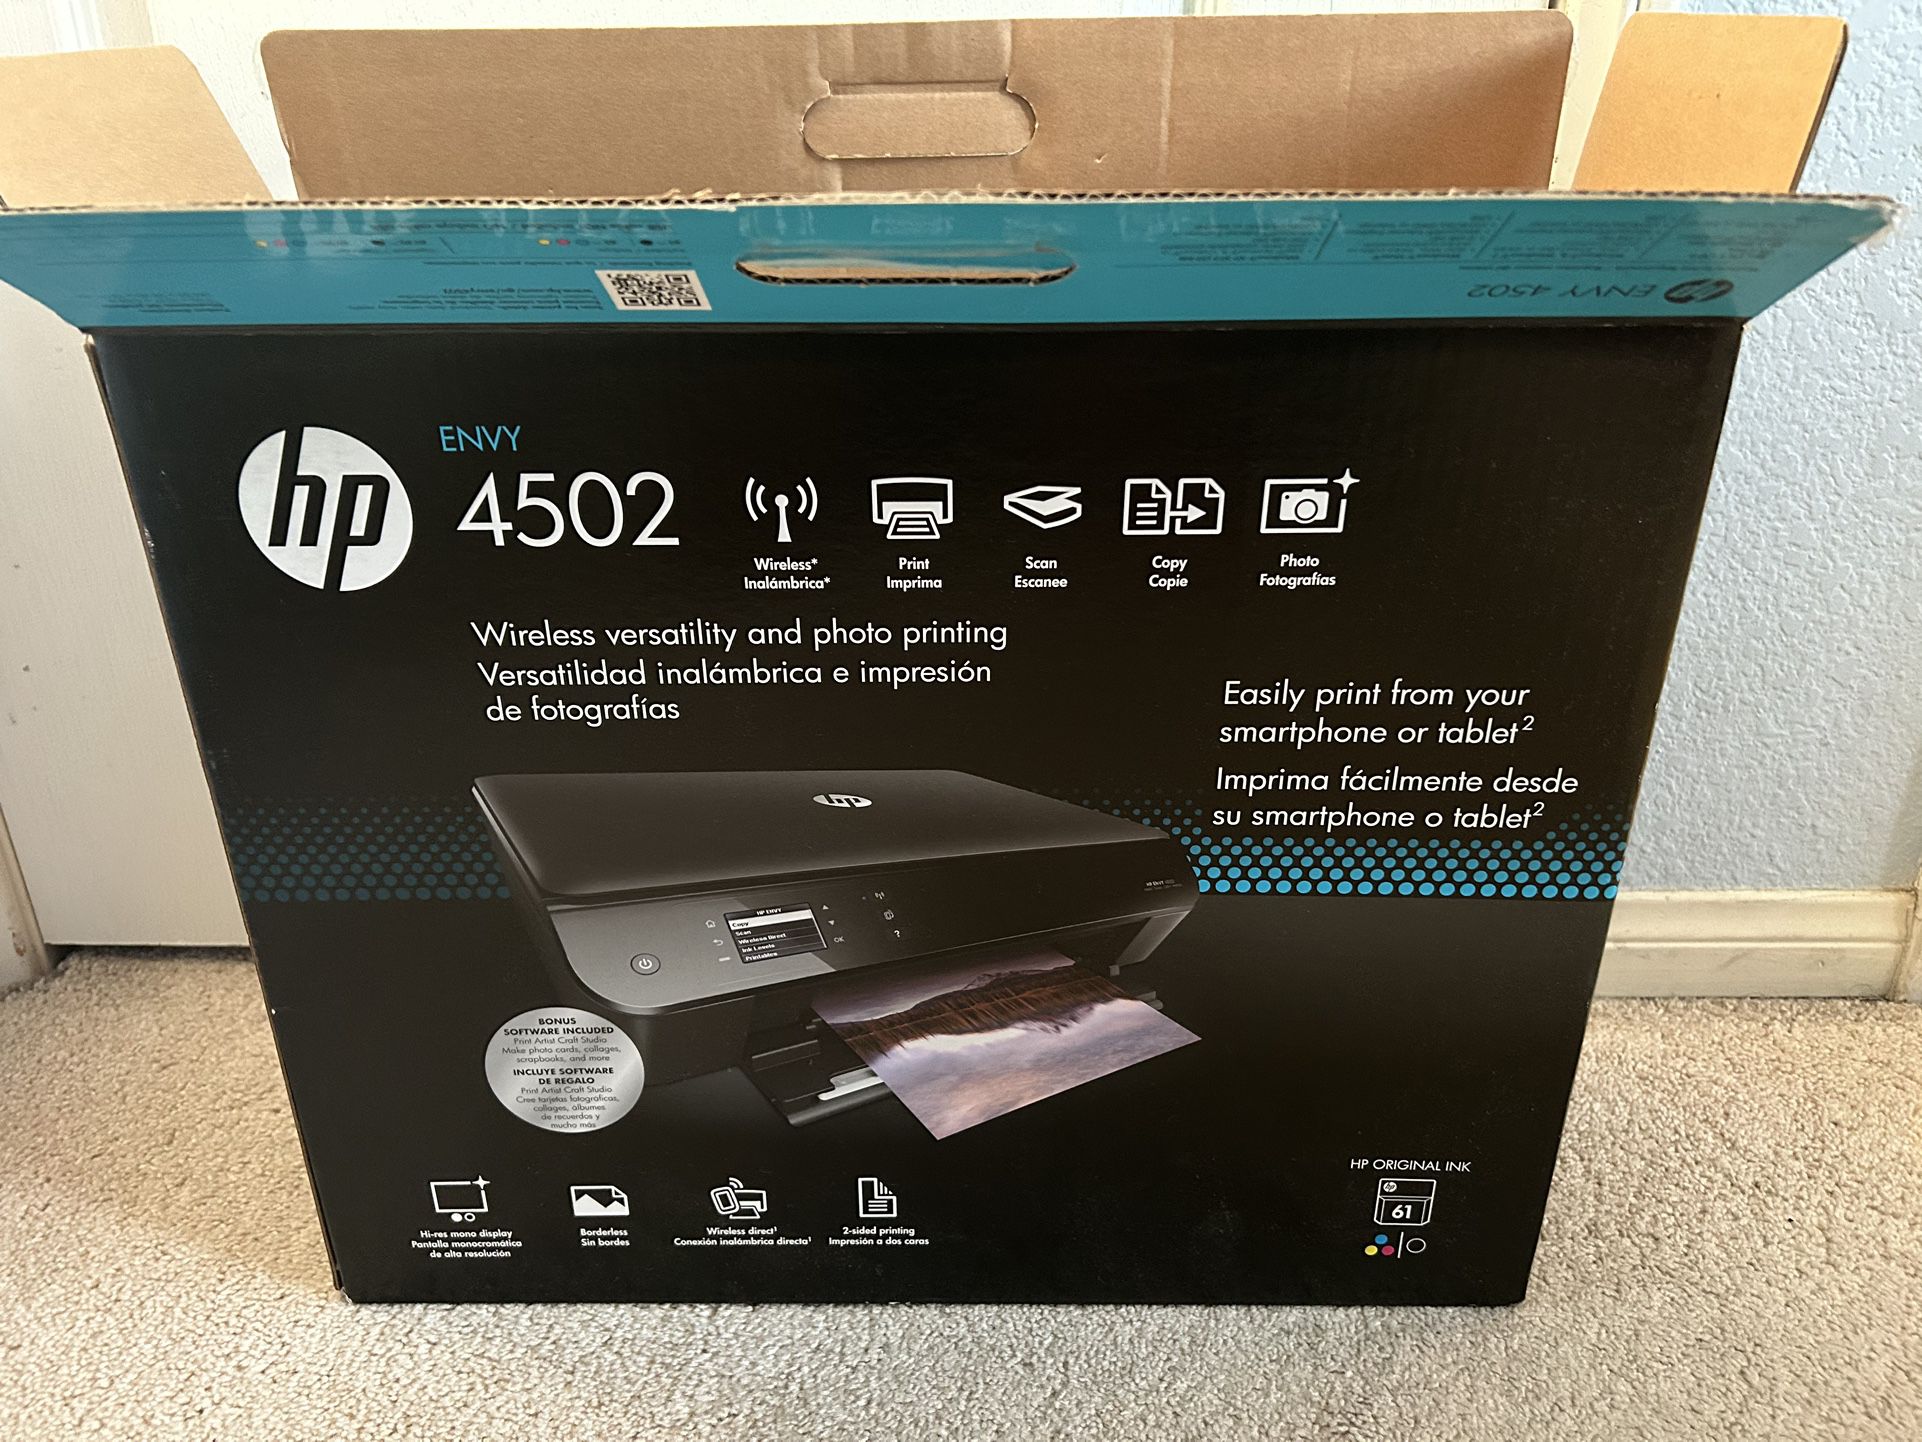 Erkende Repressalier Tilstand HP Envy 4502 Printer for Sale in San Diego, CA - OfferUp